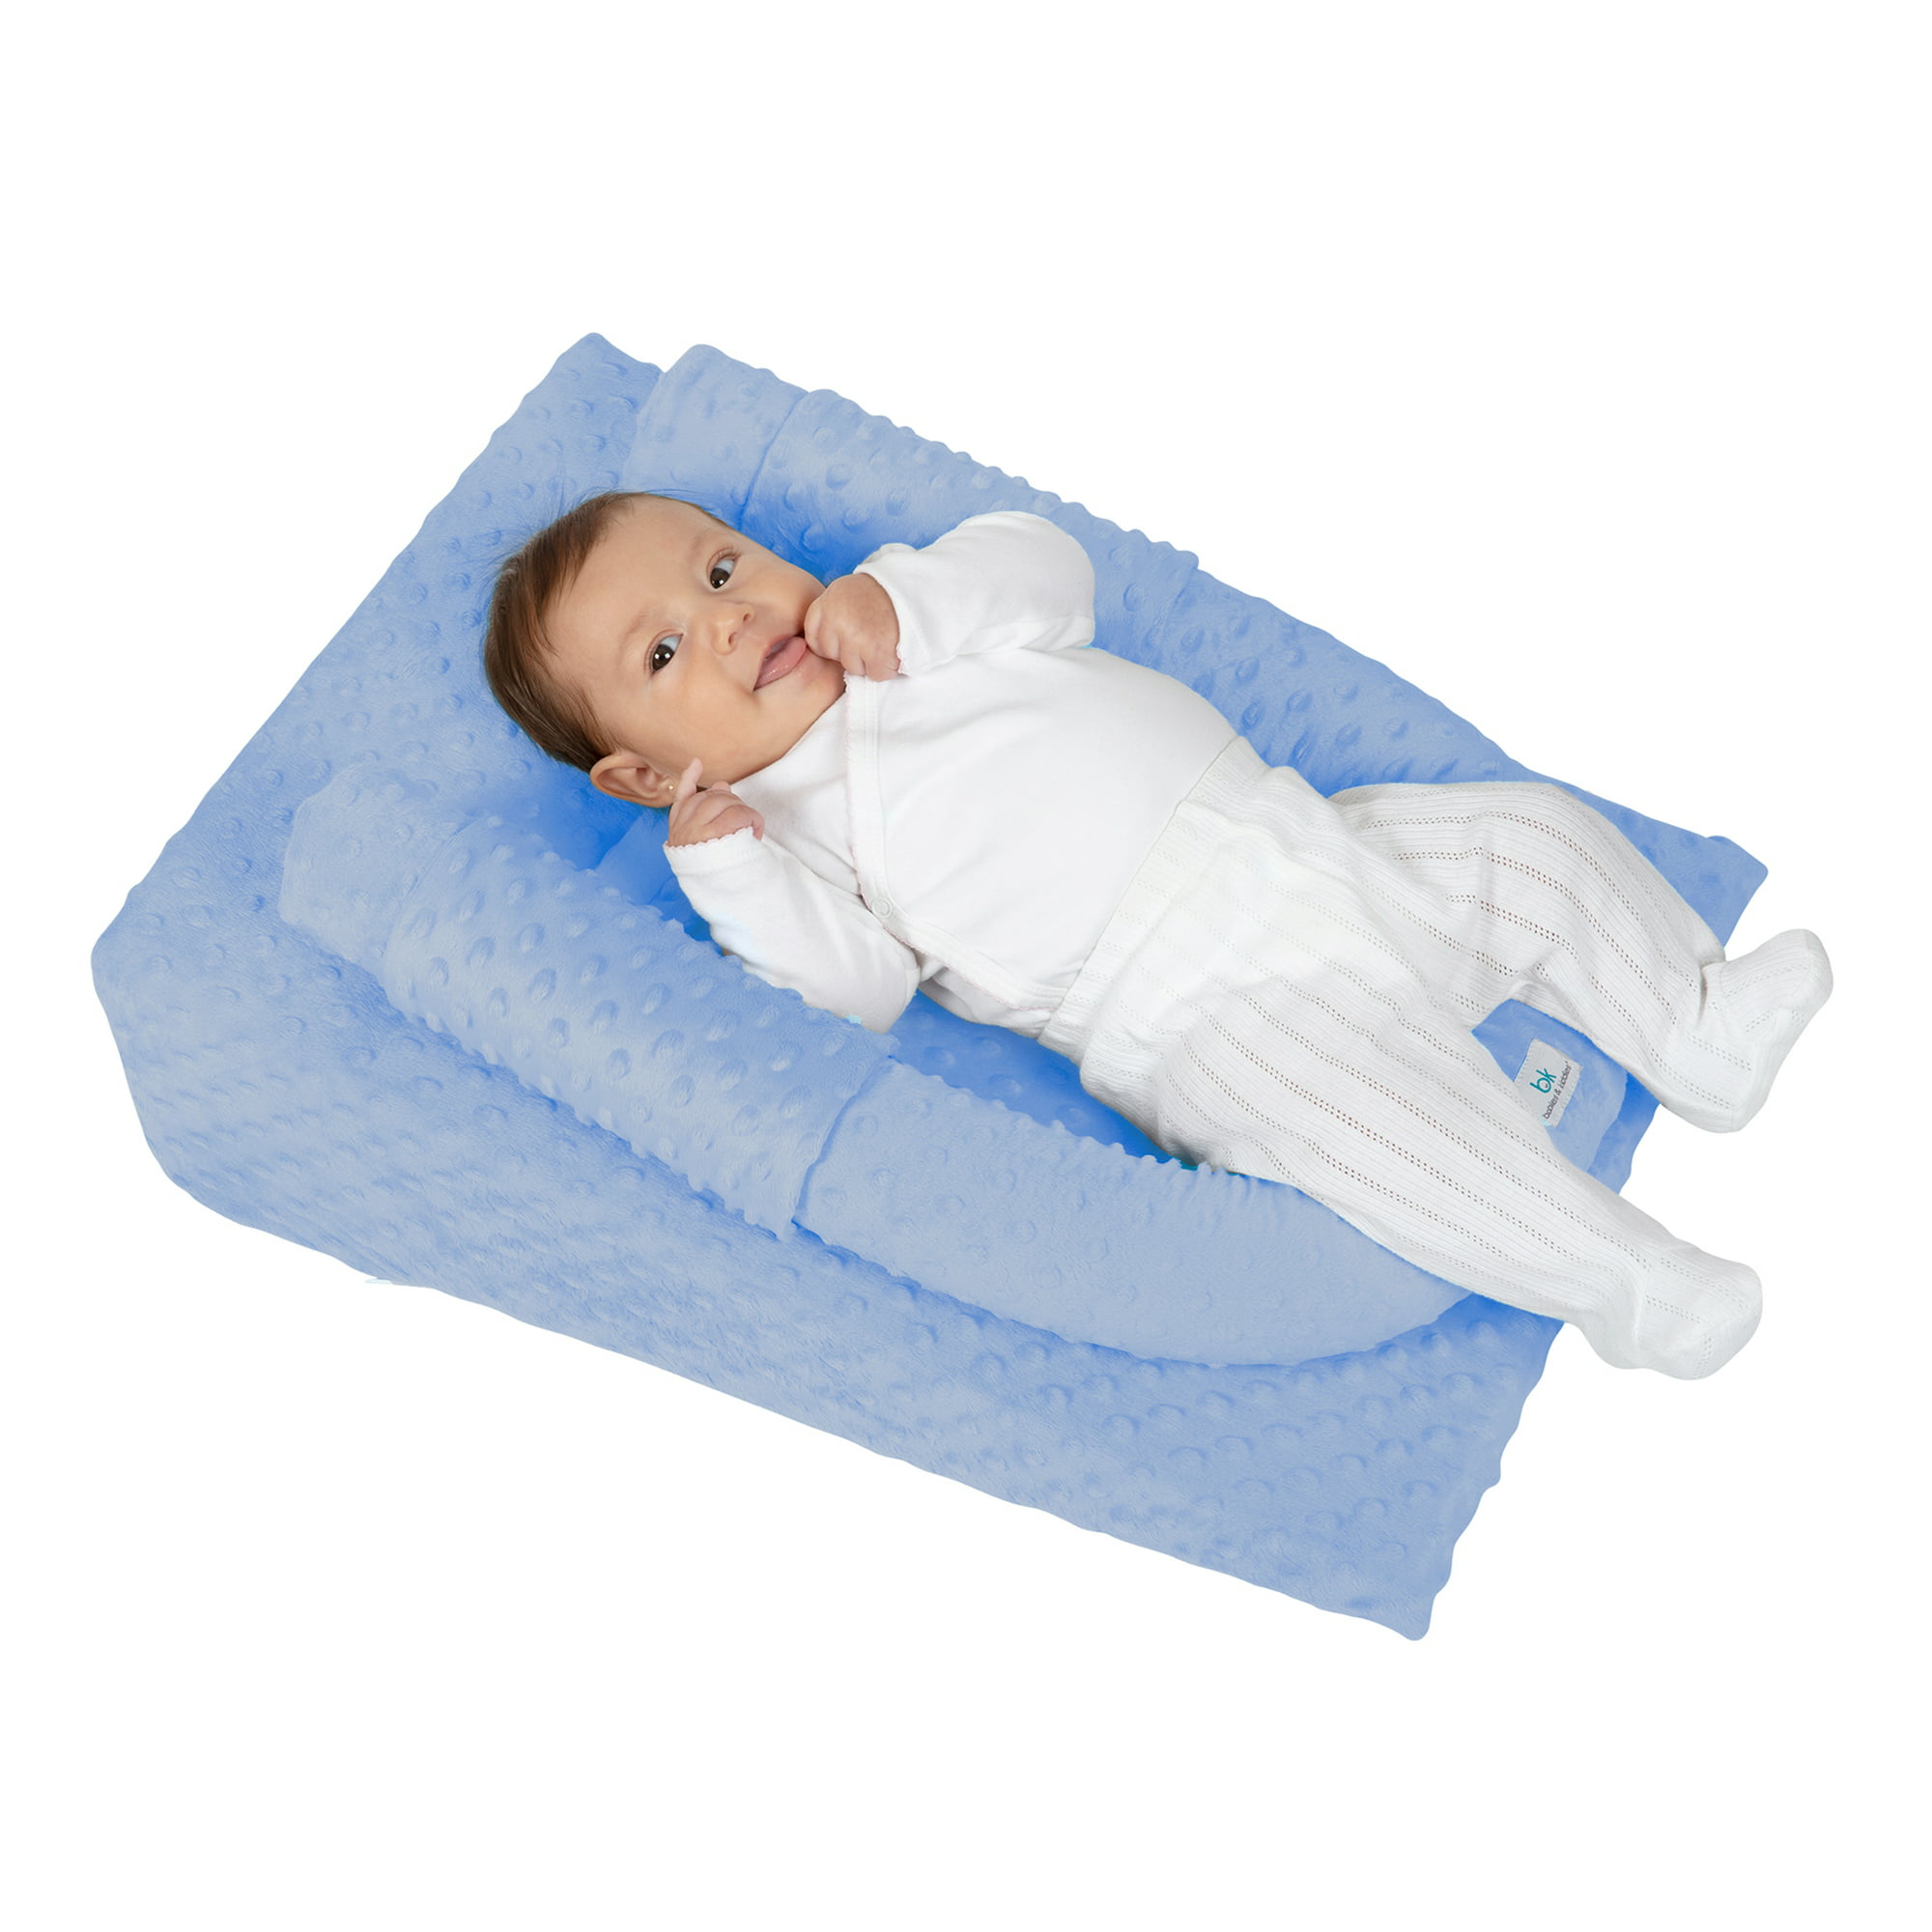 Cojín antireflujo mediano (colchón antirreflujo, antivuelco, reflujo) Babies Kiddies Azul | Walmart en línea